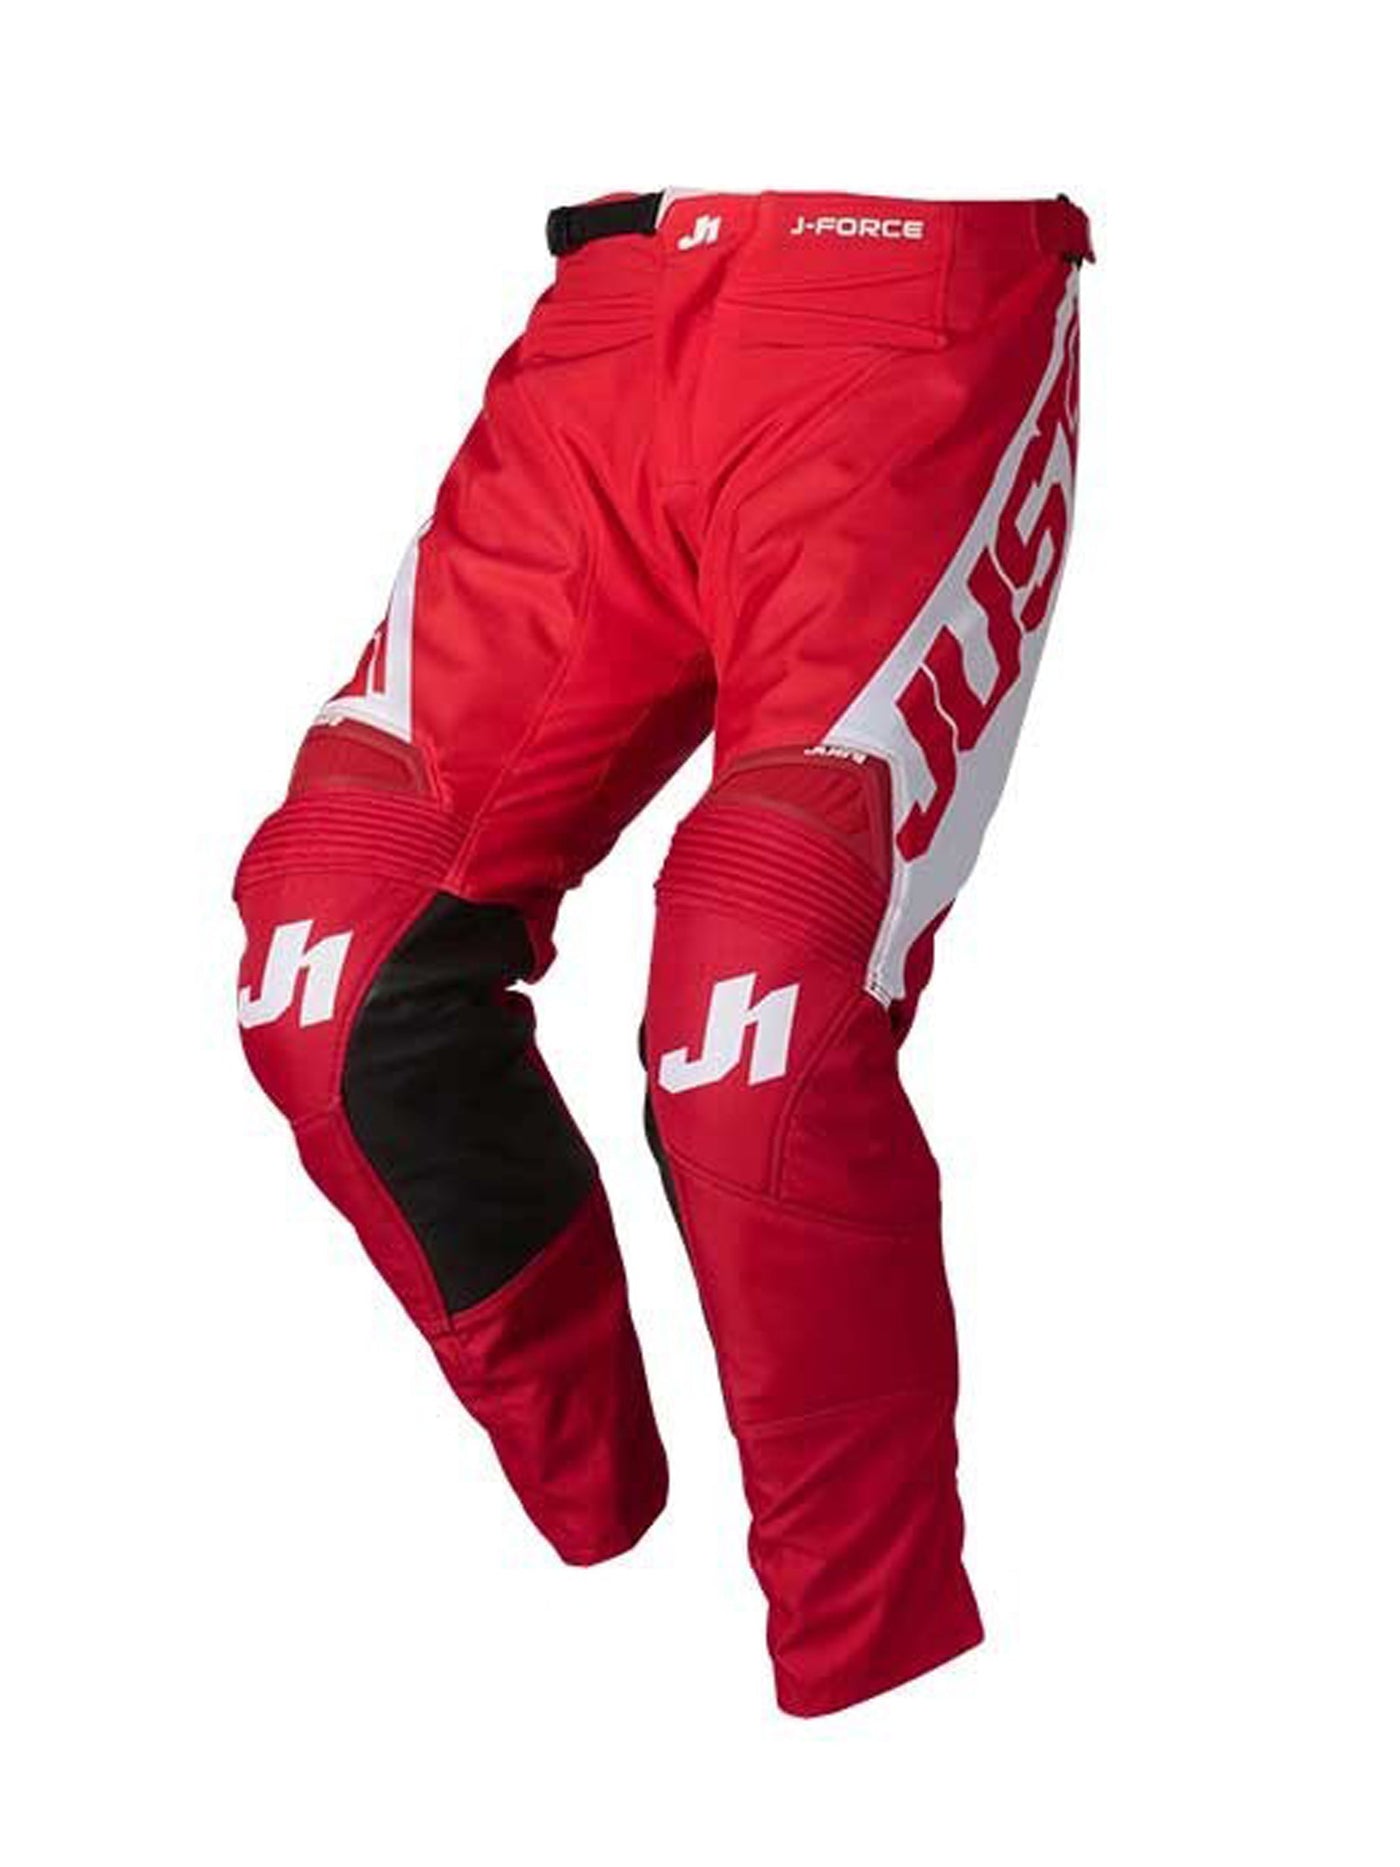  Just1 Pantalones J-Force Vertigo Rojo-Blanco